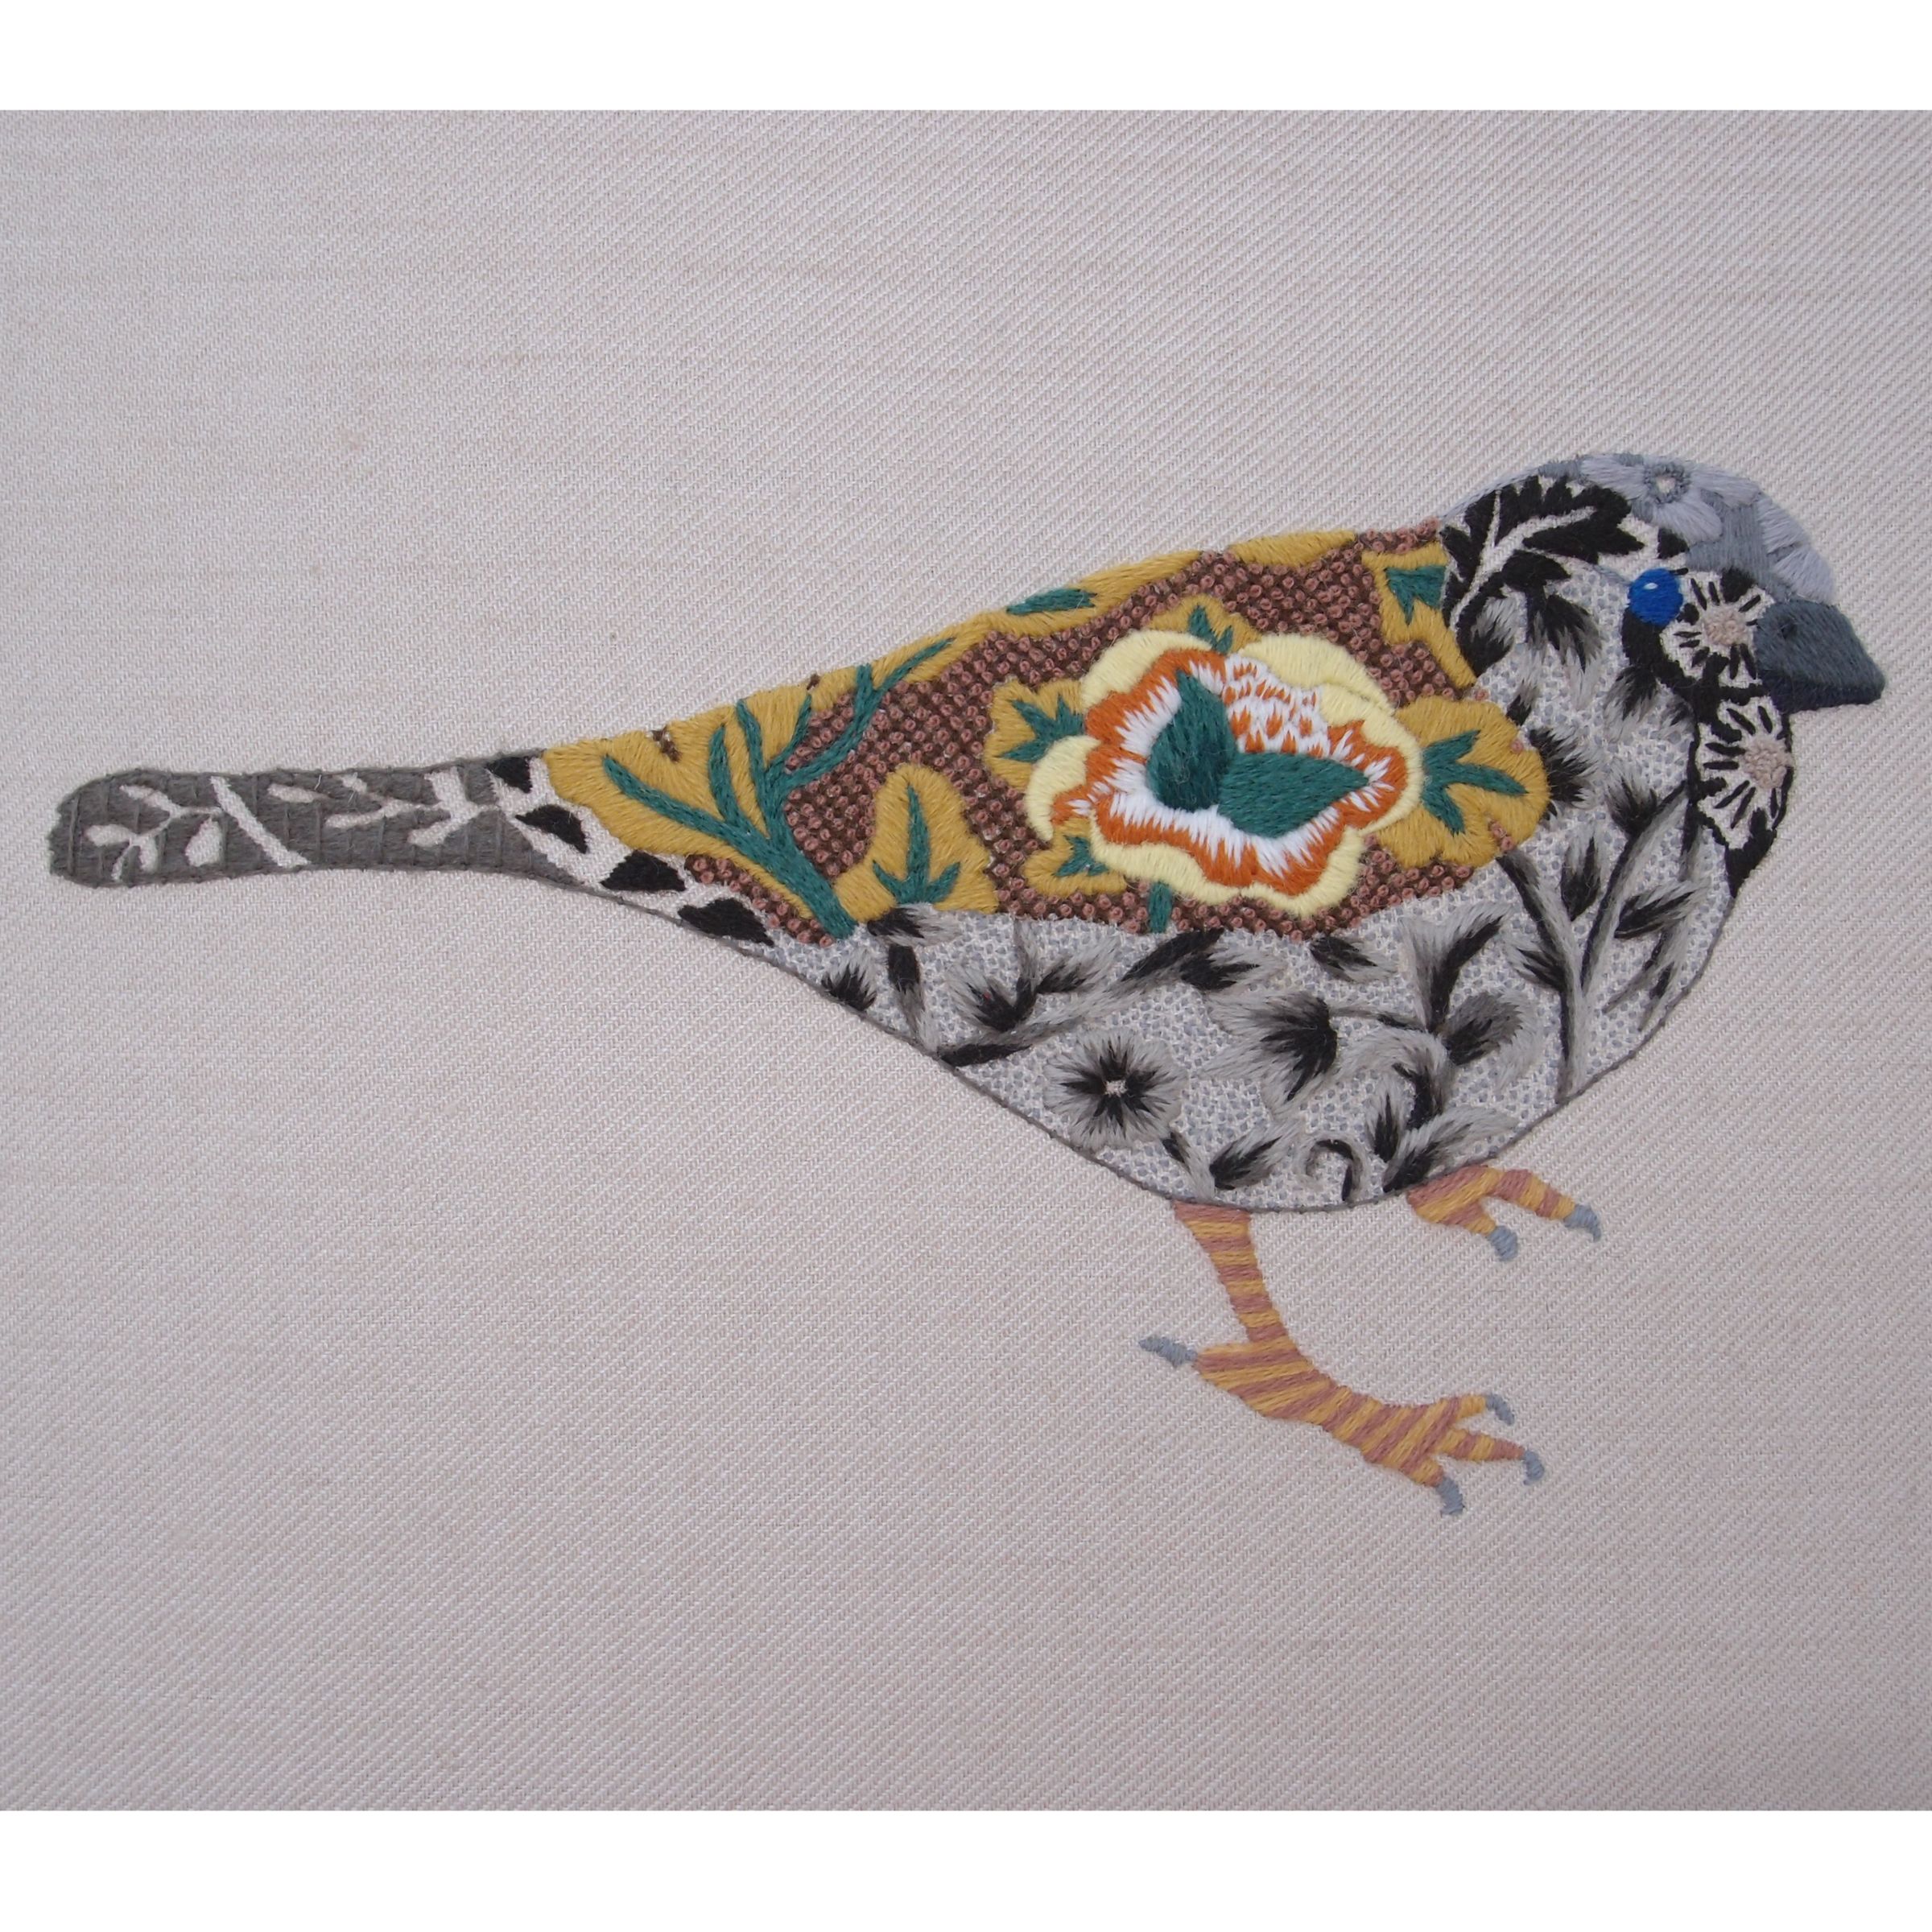 Nicola Jarvis Sparrow Crewel Work Embroidery Kit